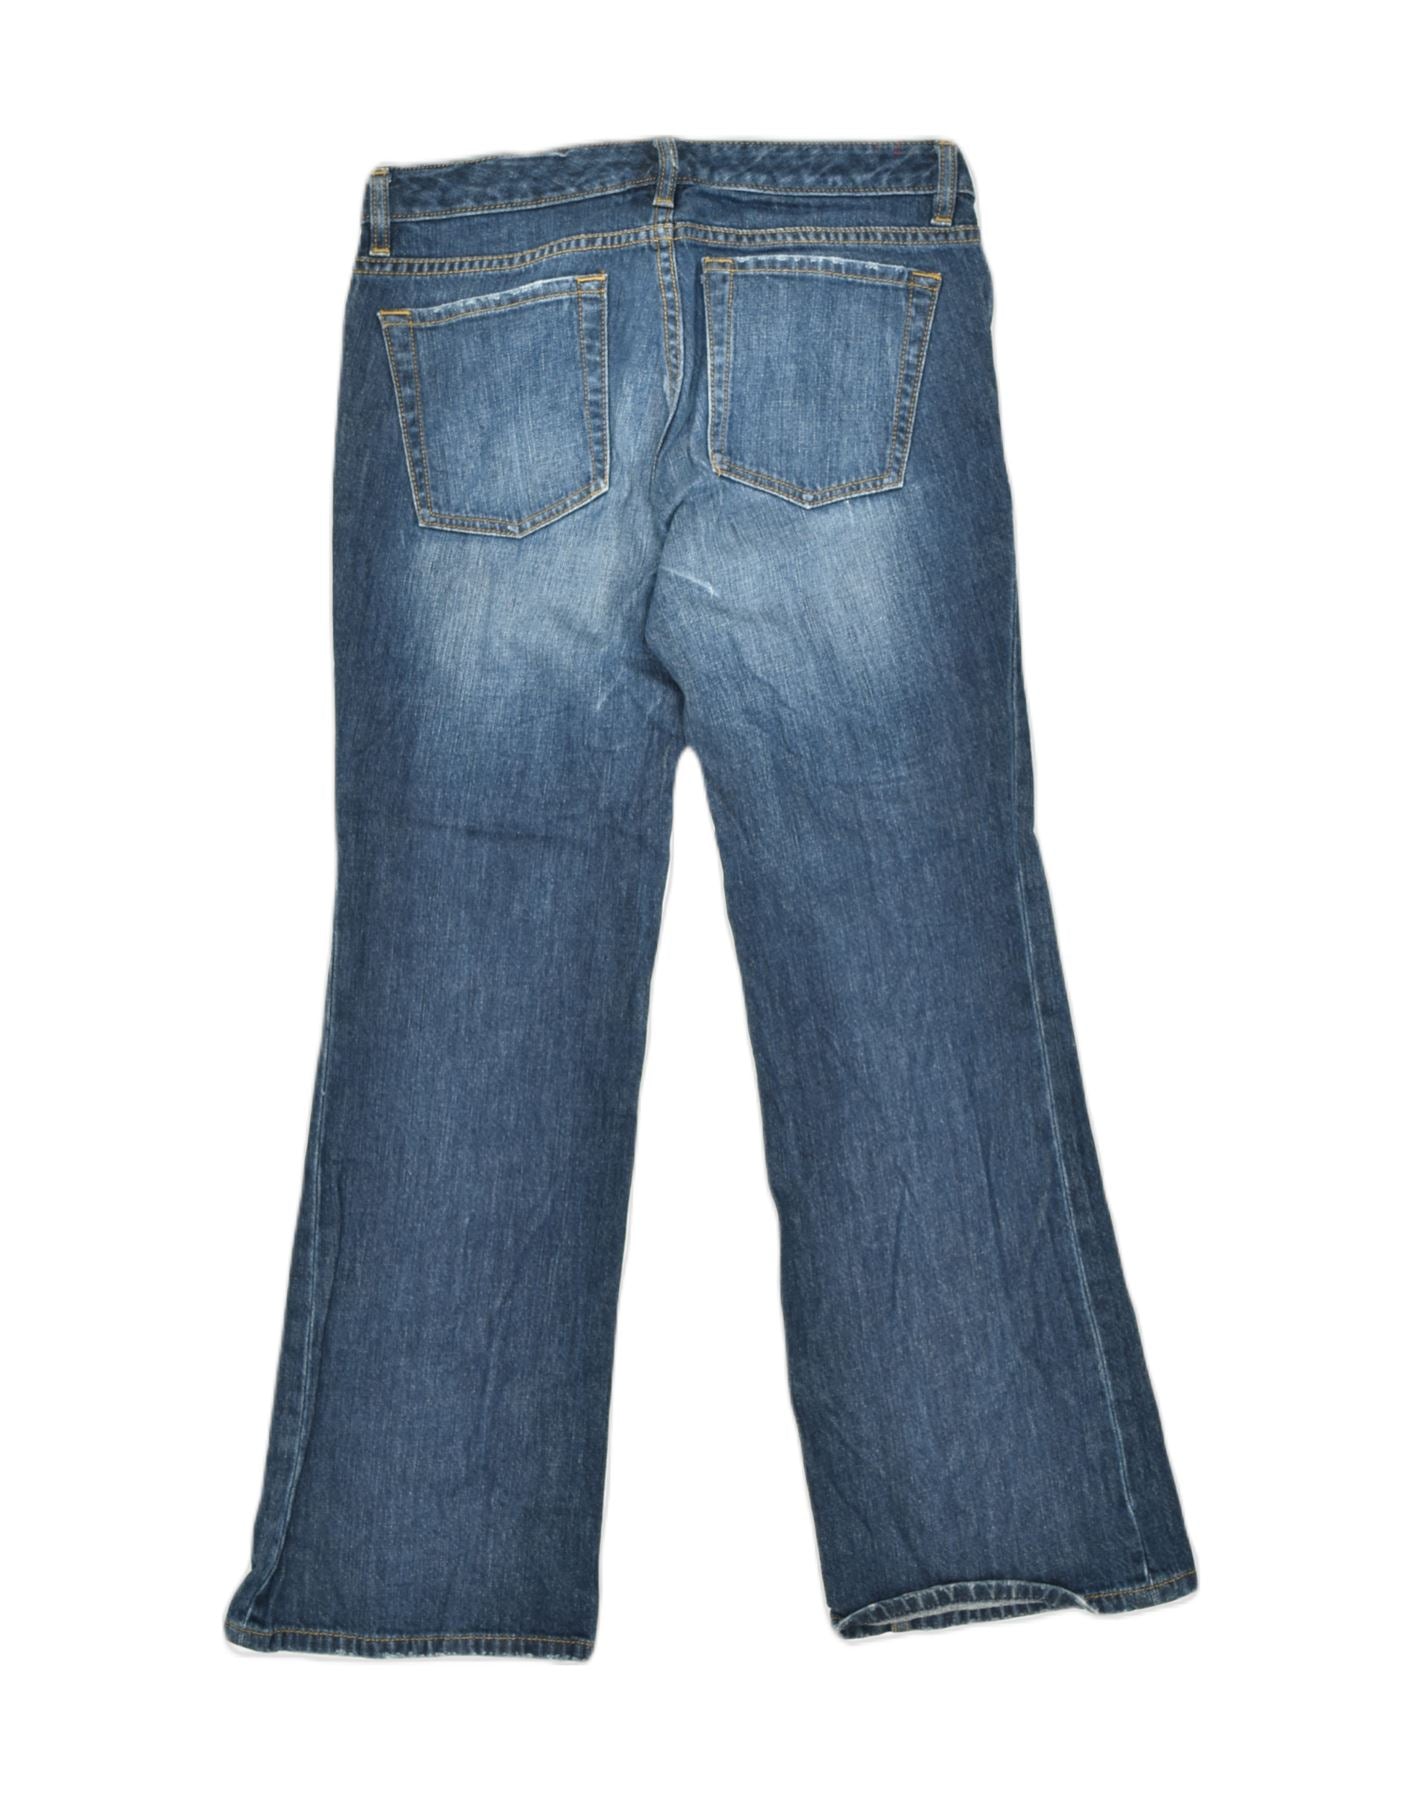 BANANA REPUBLIC Womens Petite Bootcut Jeans US 6 Medium W33 L31 Blue, Vintage & Second-Hand Clothing Online